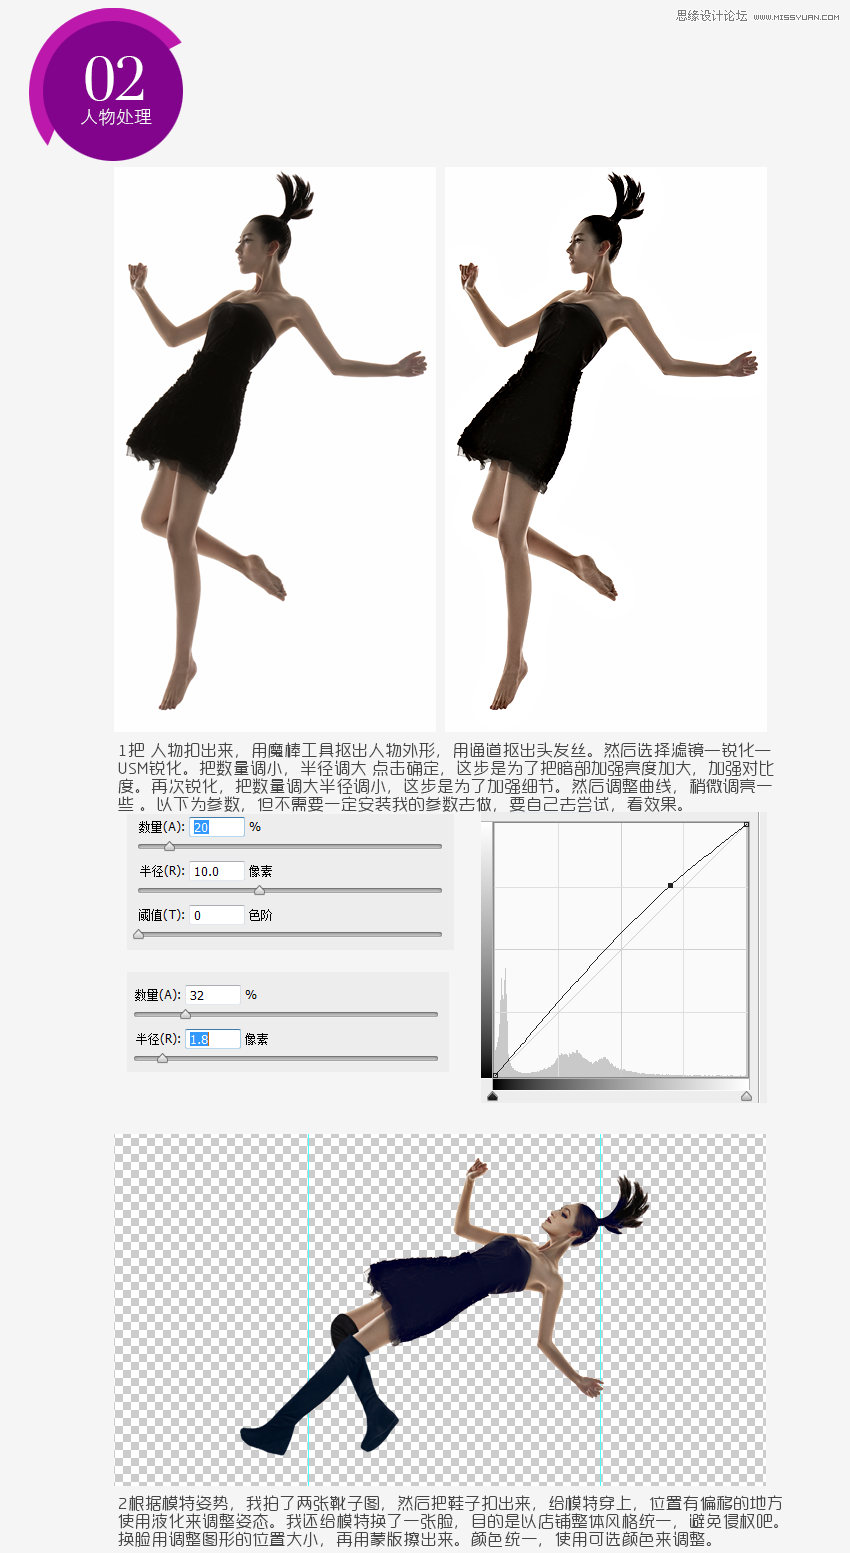 Photoshop解析淘寶全屏海報的設計過程,PS教程,思緣教程網